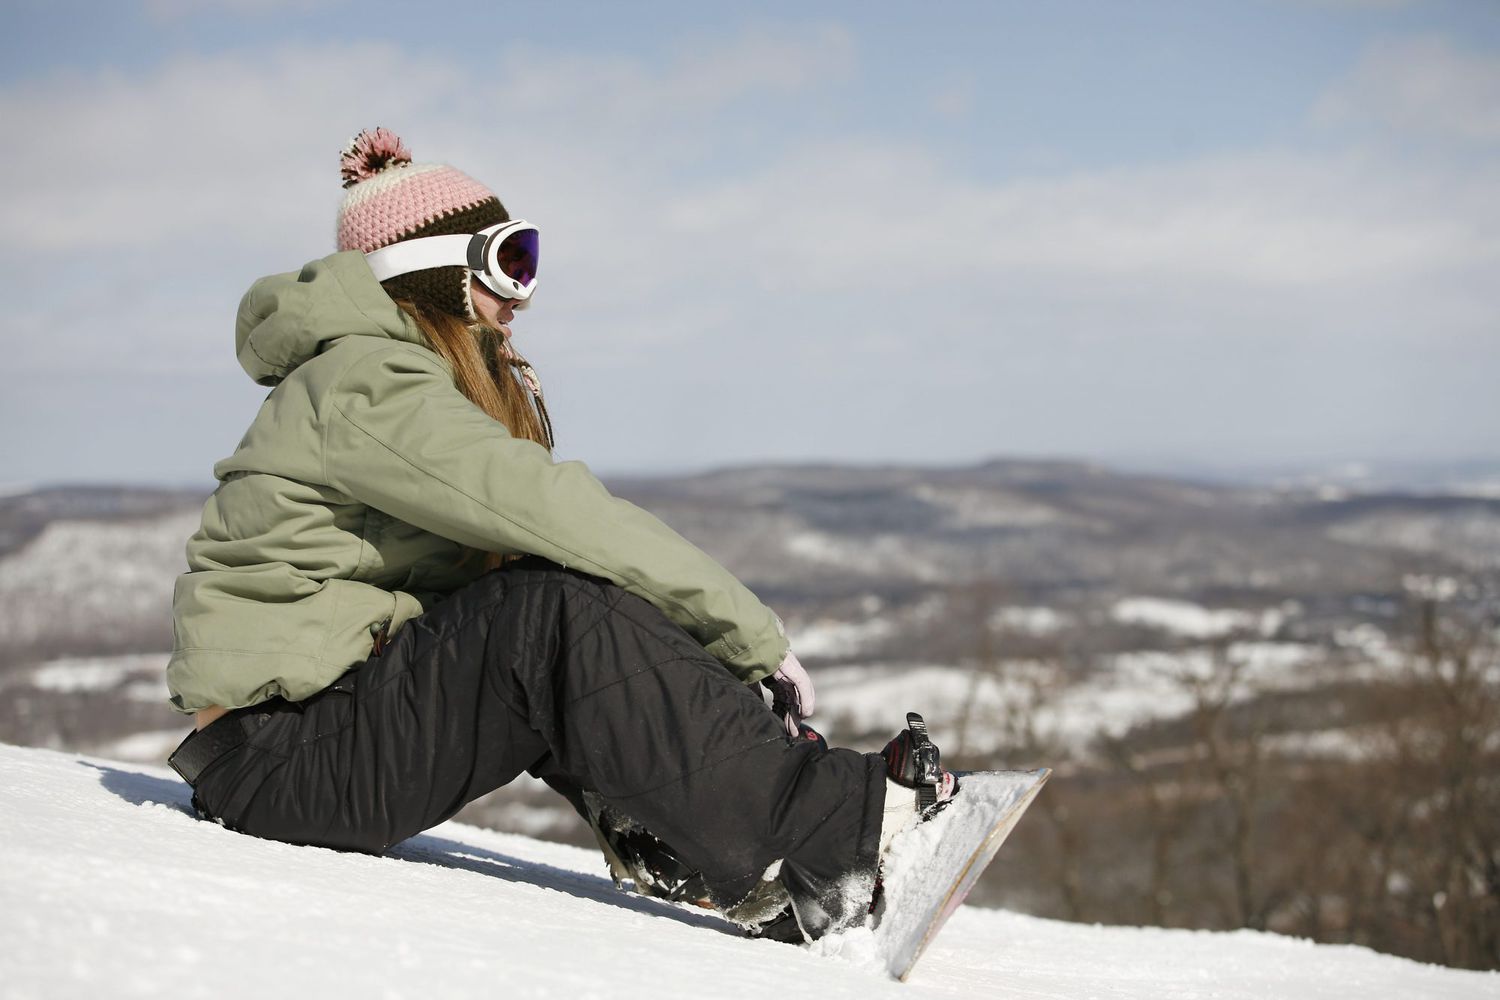 Women Black Ski Suit Set Snowboarding Outdoor Sports Waterproof Jackets+pants